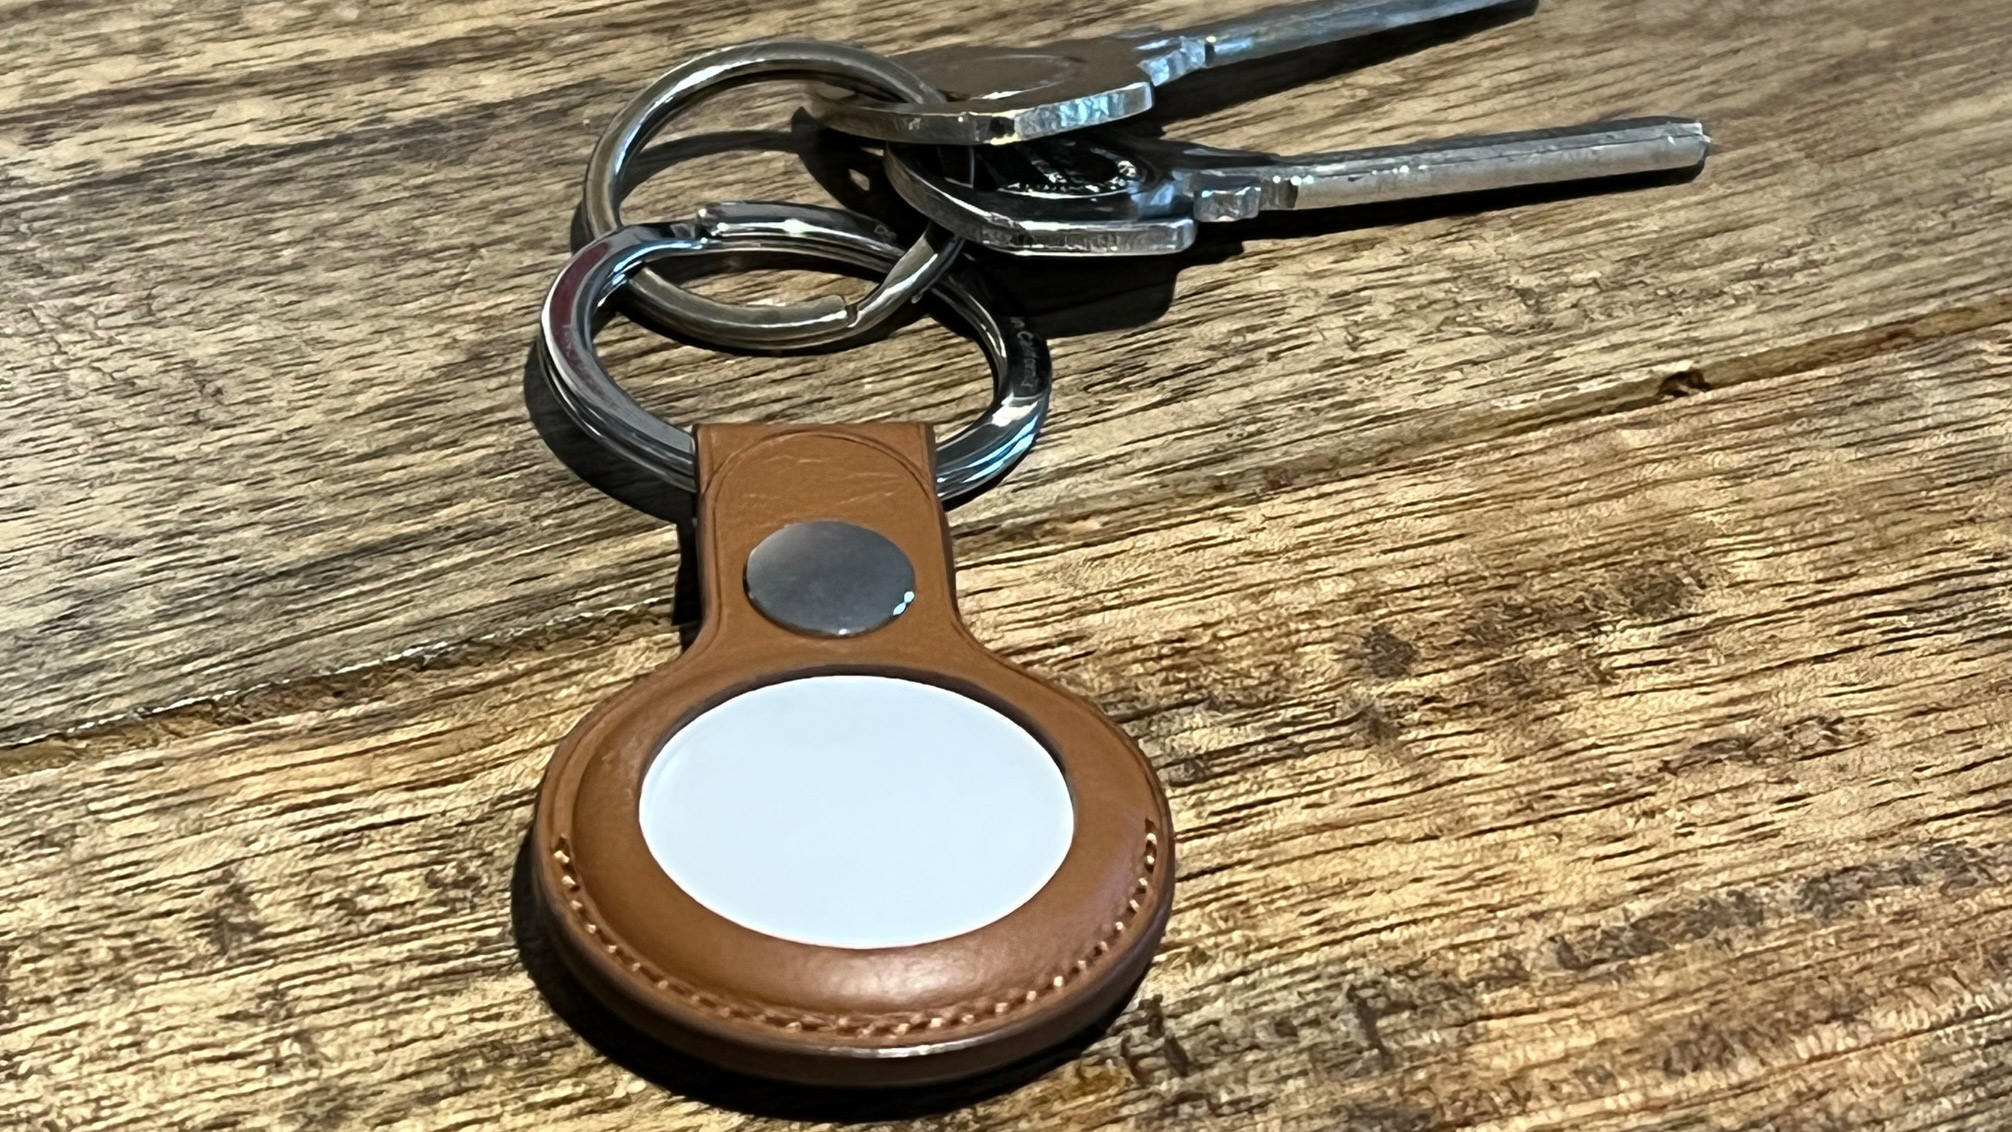 Apple AirTag dalam gantungan kunci kulit berwarna cokelat, terpasang pada beberapa kunci di permukaan kayu